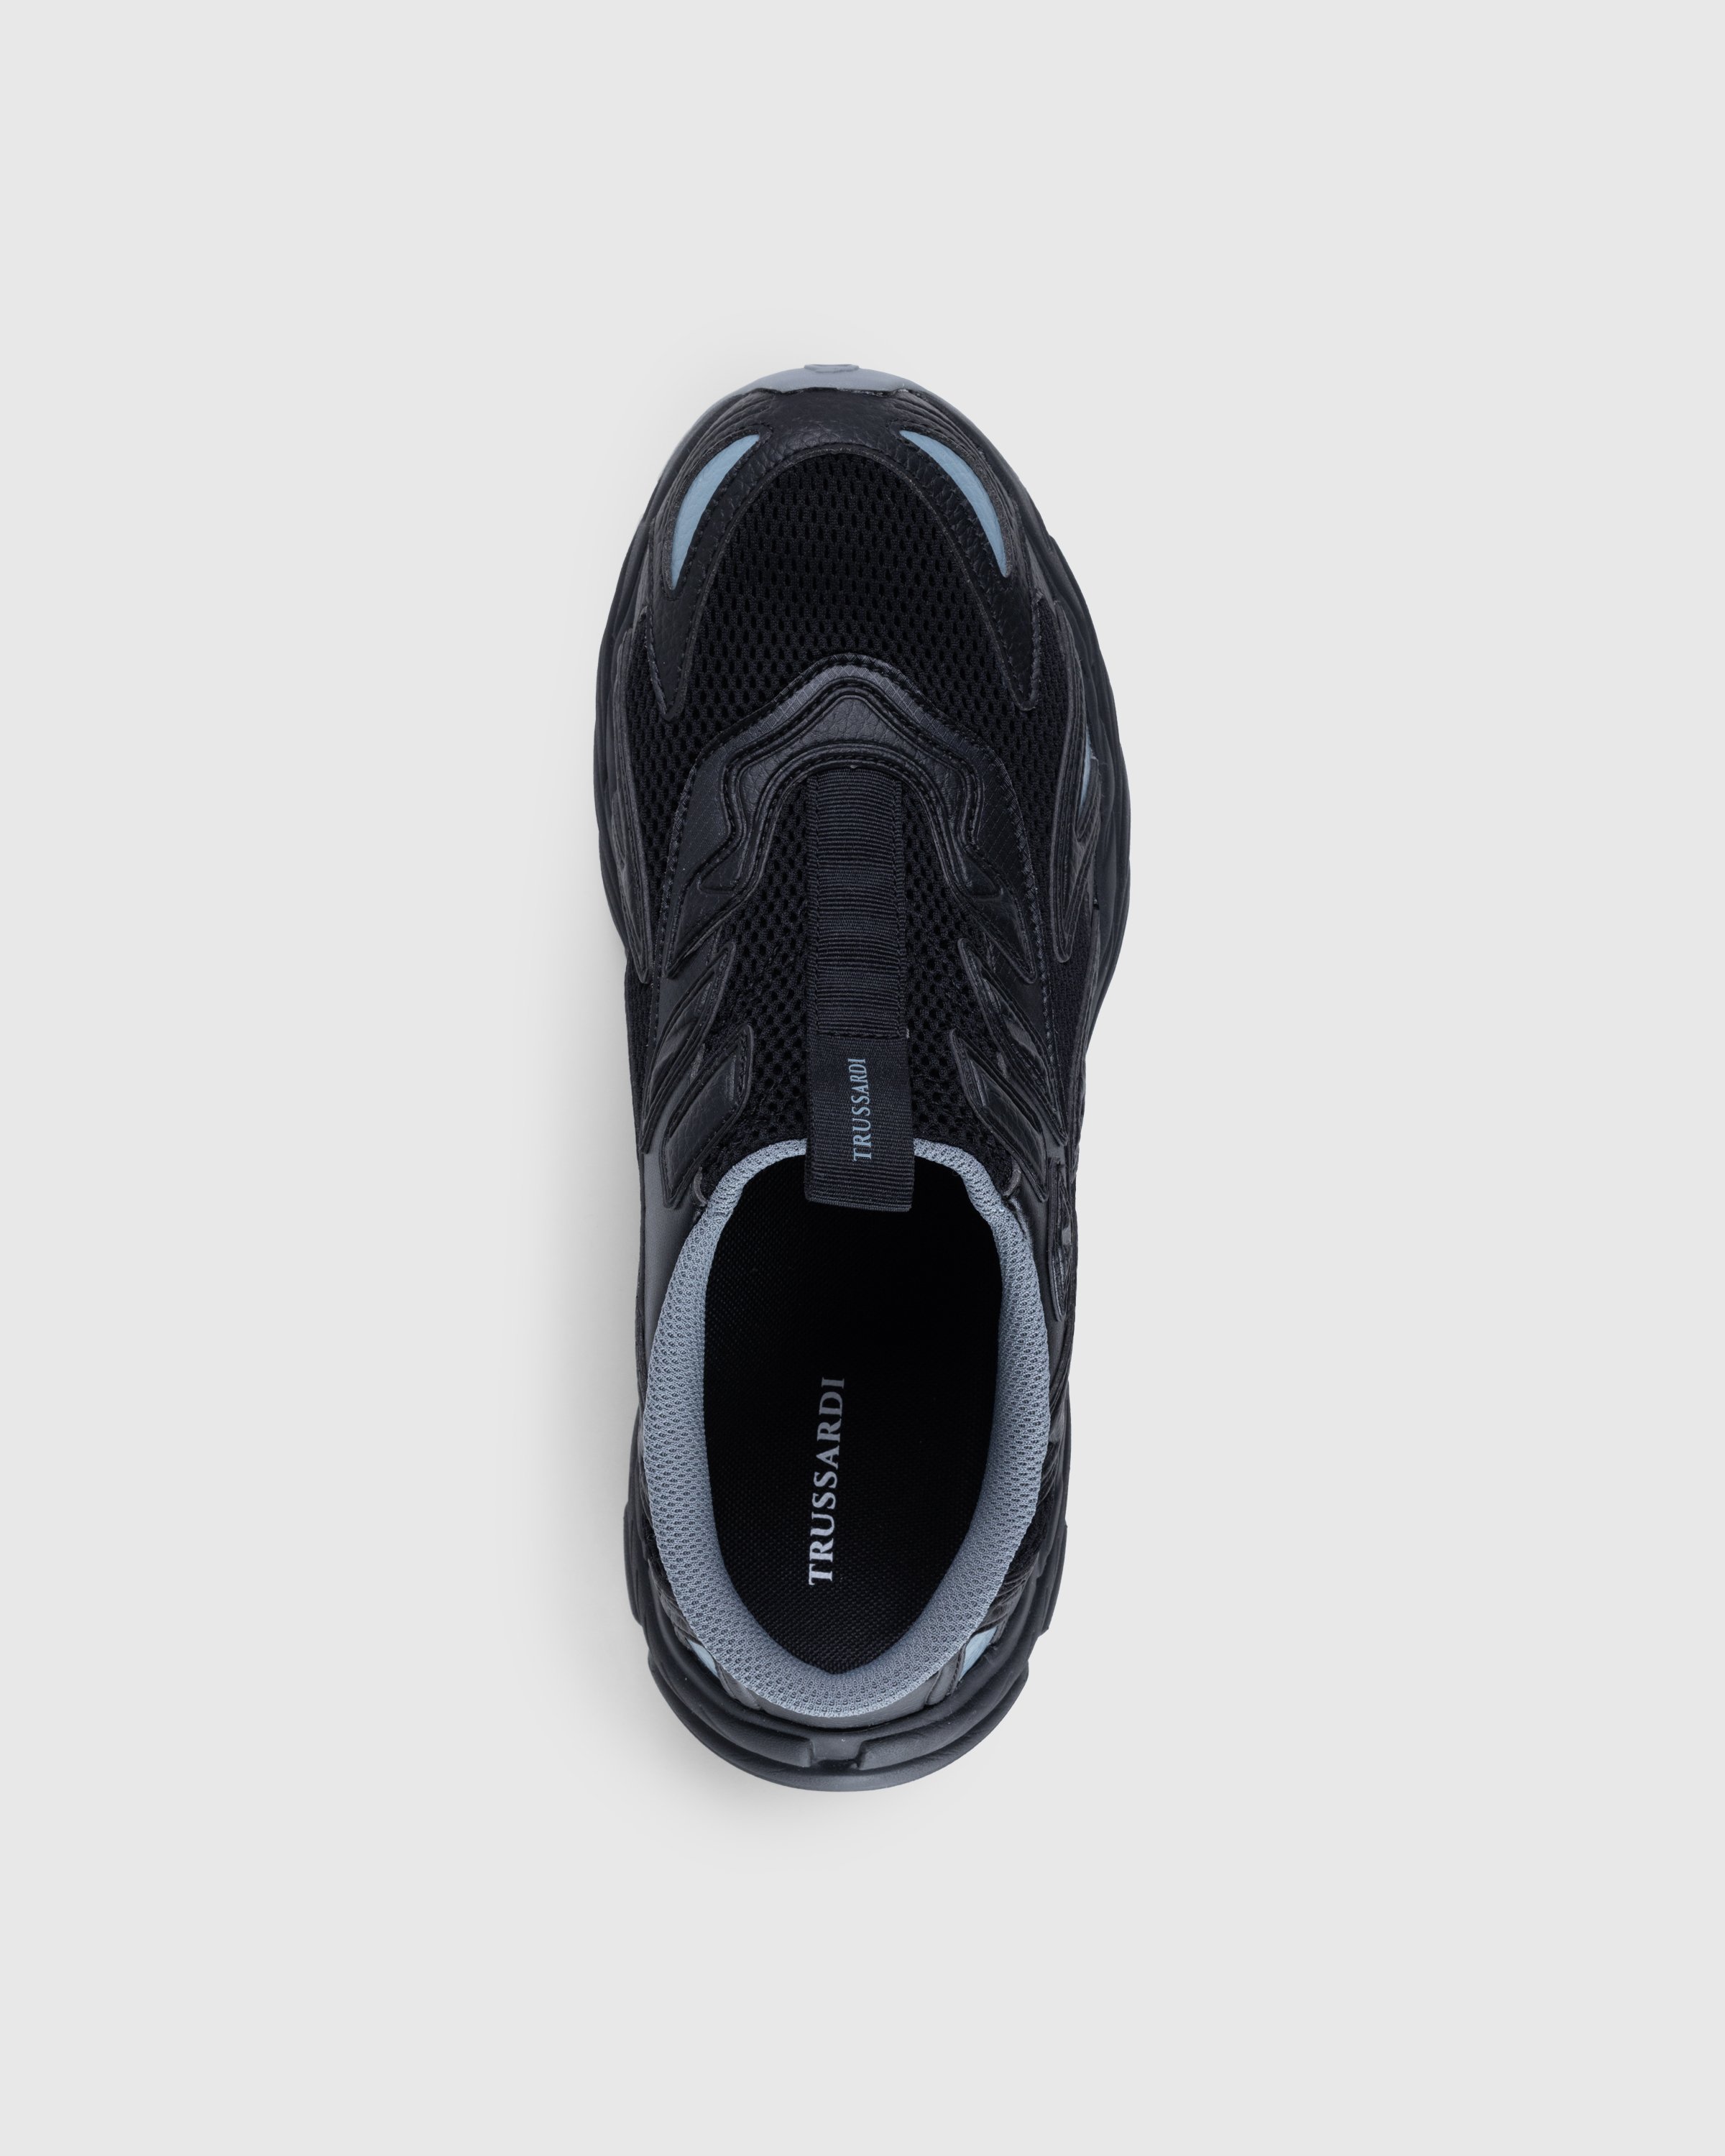 Trussardi - Retro Mule Sneaker - Footwear - Black - Image 5